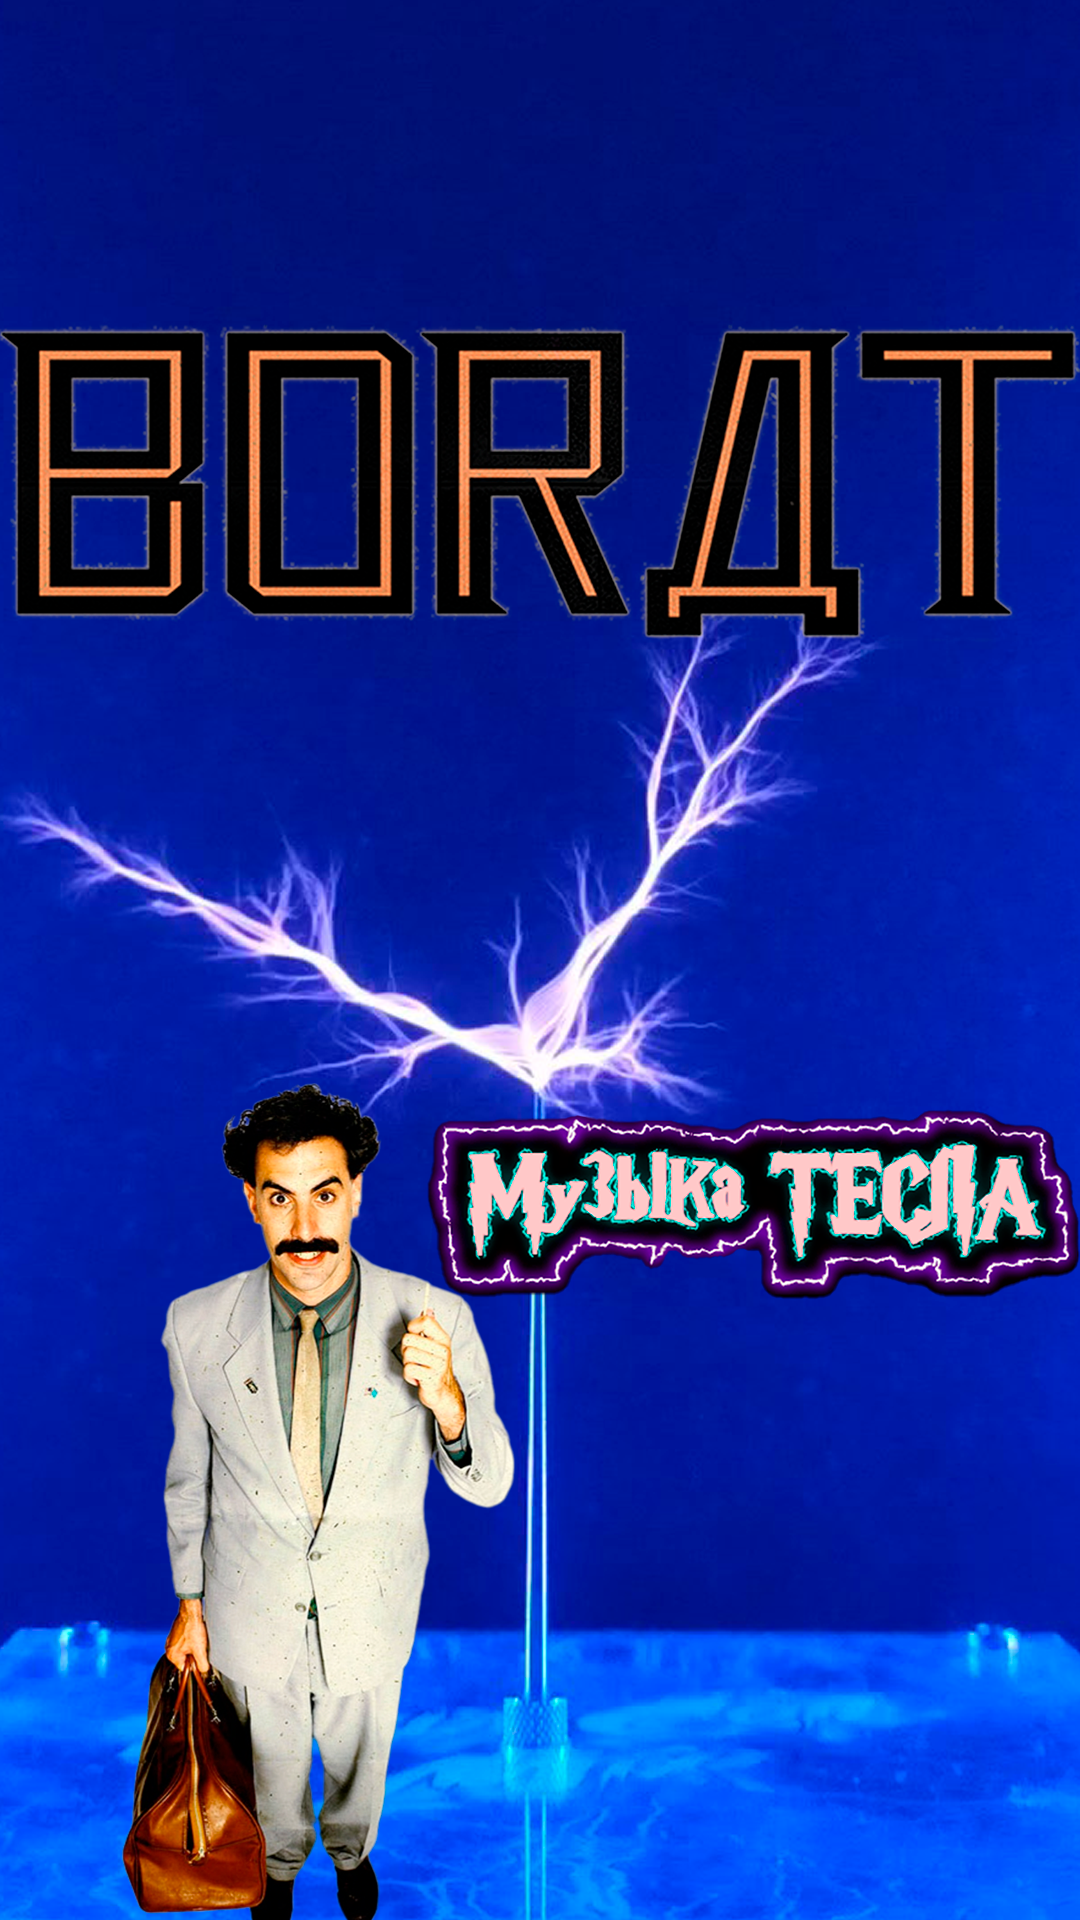 OMFO - Magic Mamaliga - Borat OST Tesla Coil Mix #музыкатесла